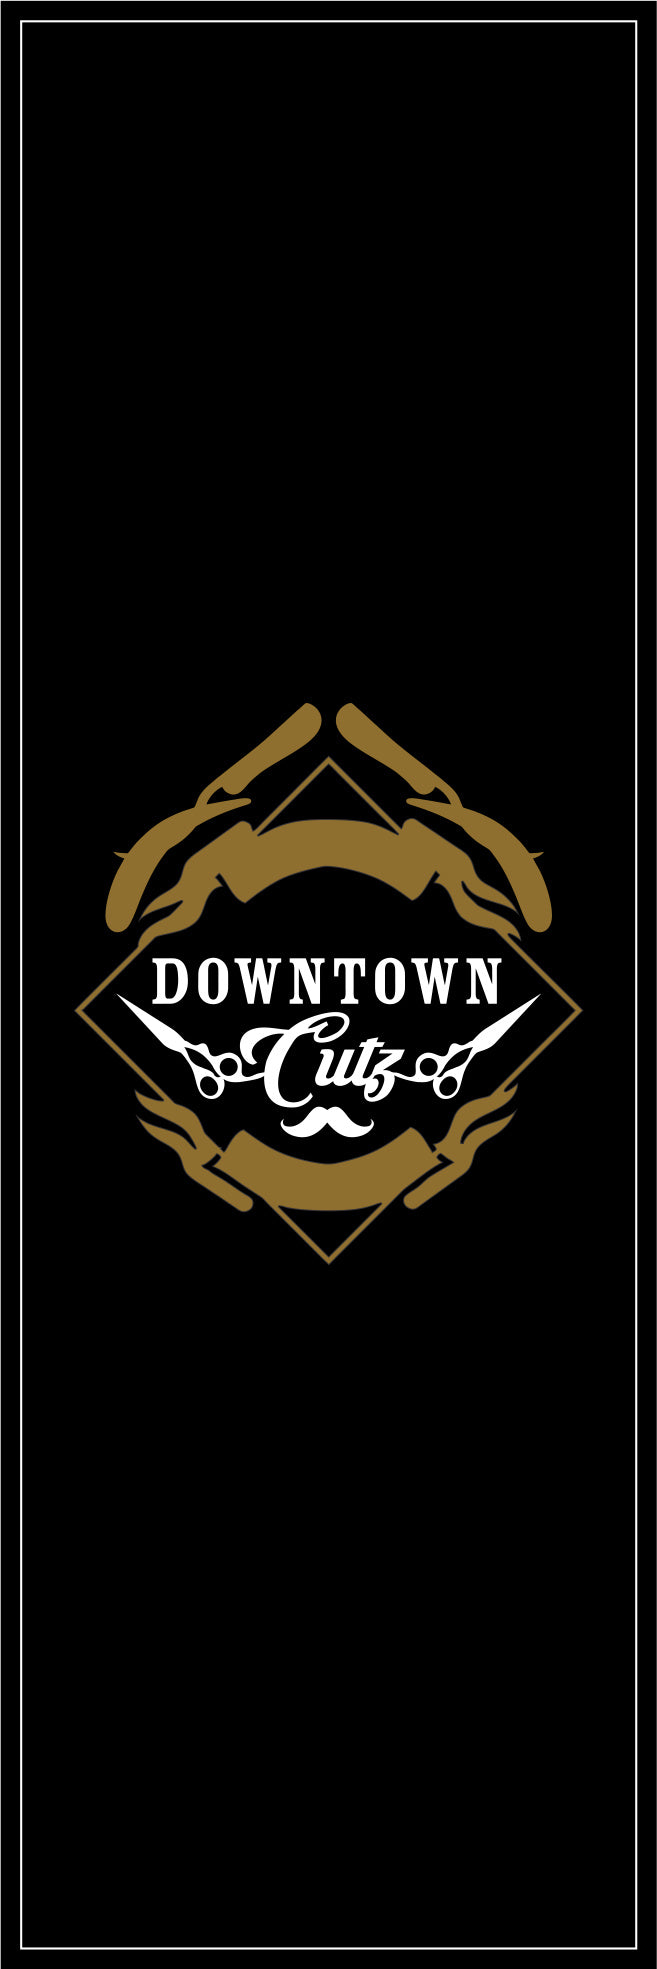 Downtown cutz barbershop §